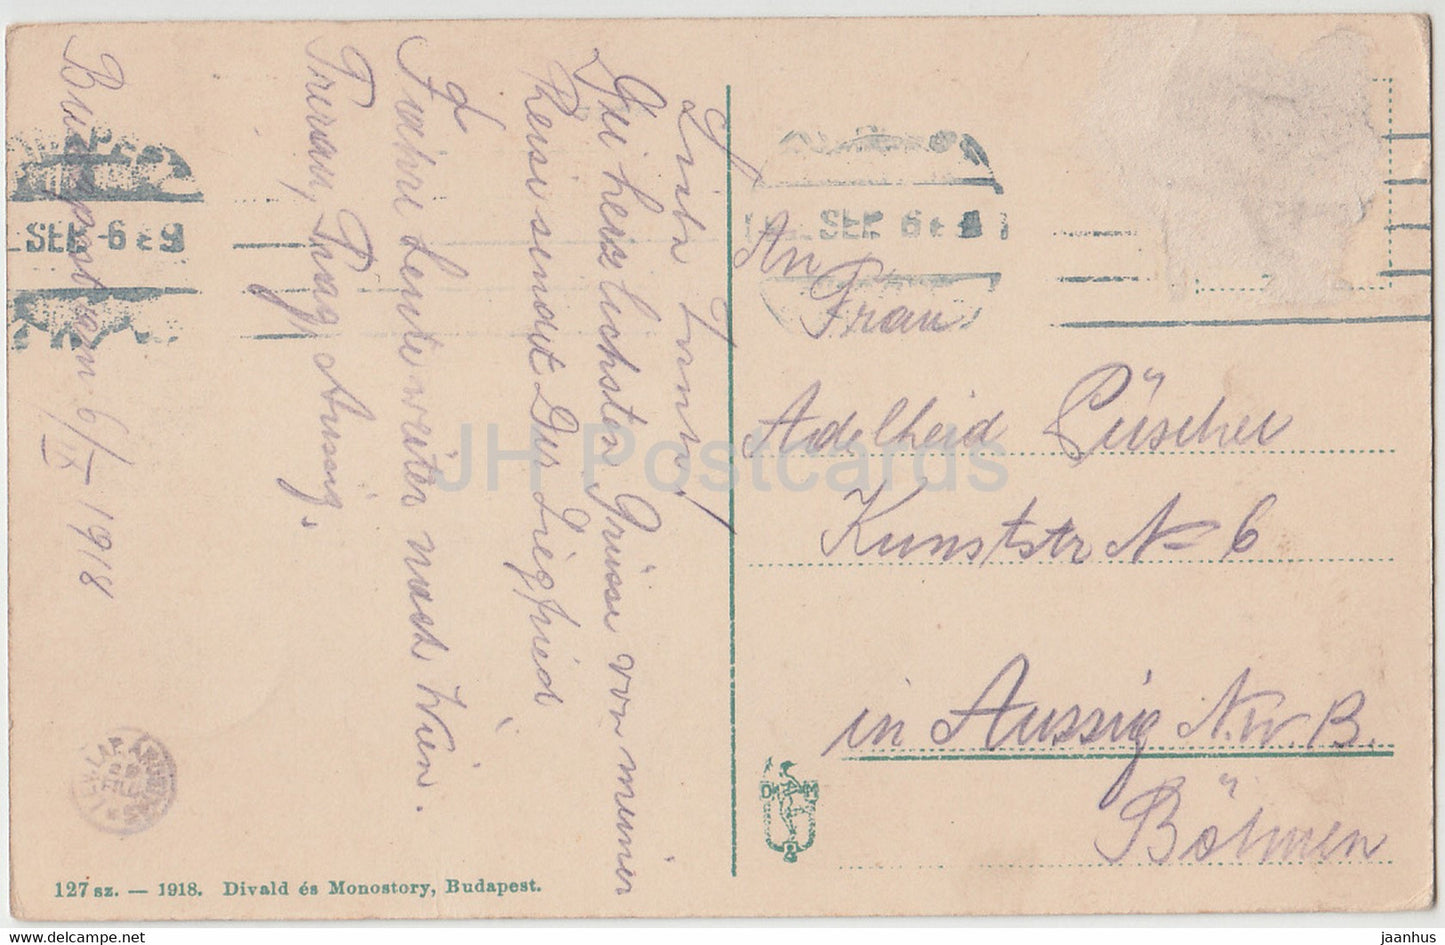 Budapest - Mezogazdasagi muzeum reszlete a Varosligetben - museum - old postcard - Hungary - used